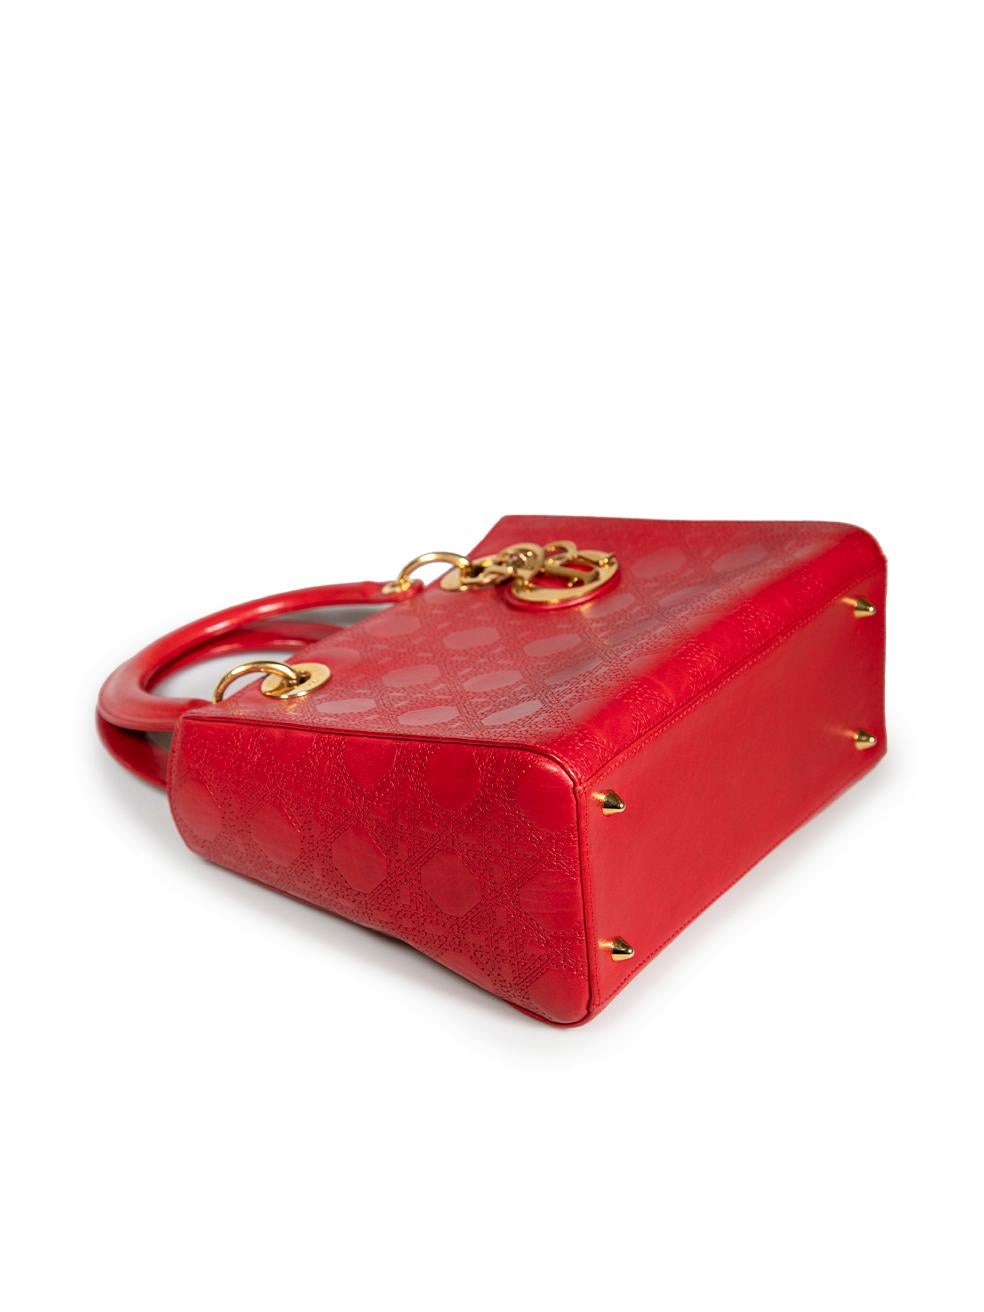 Dior Red Leather Laser Cut Medium Lady Dior Bag For Sale 2